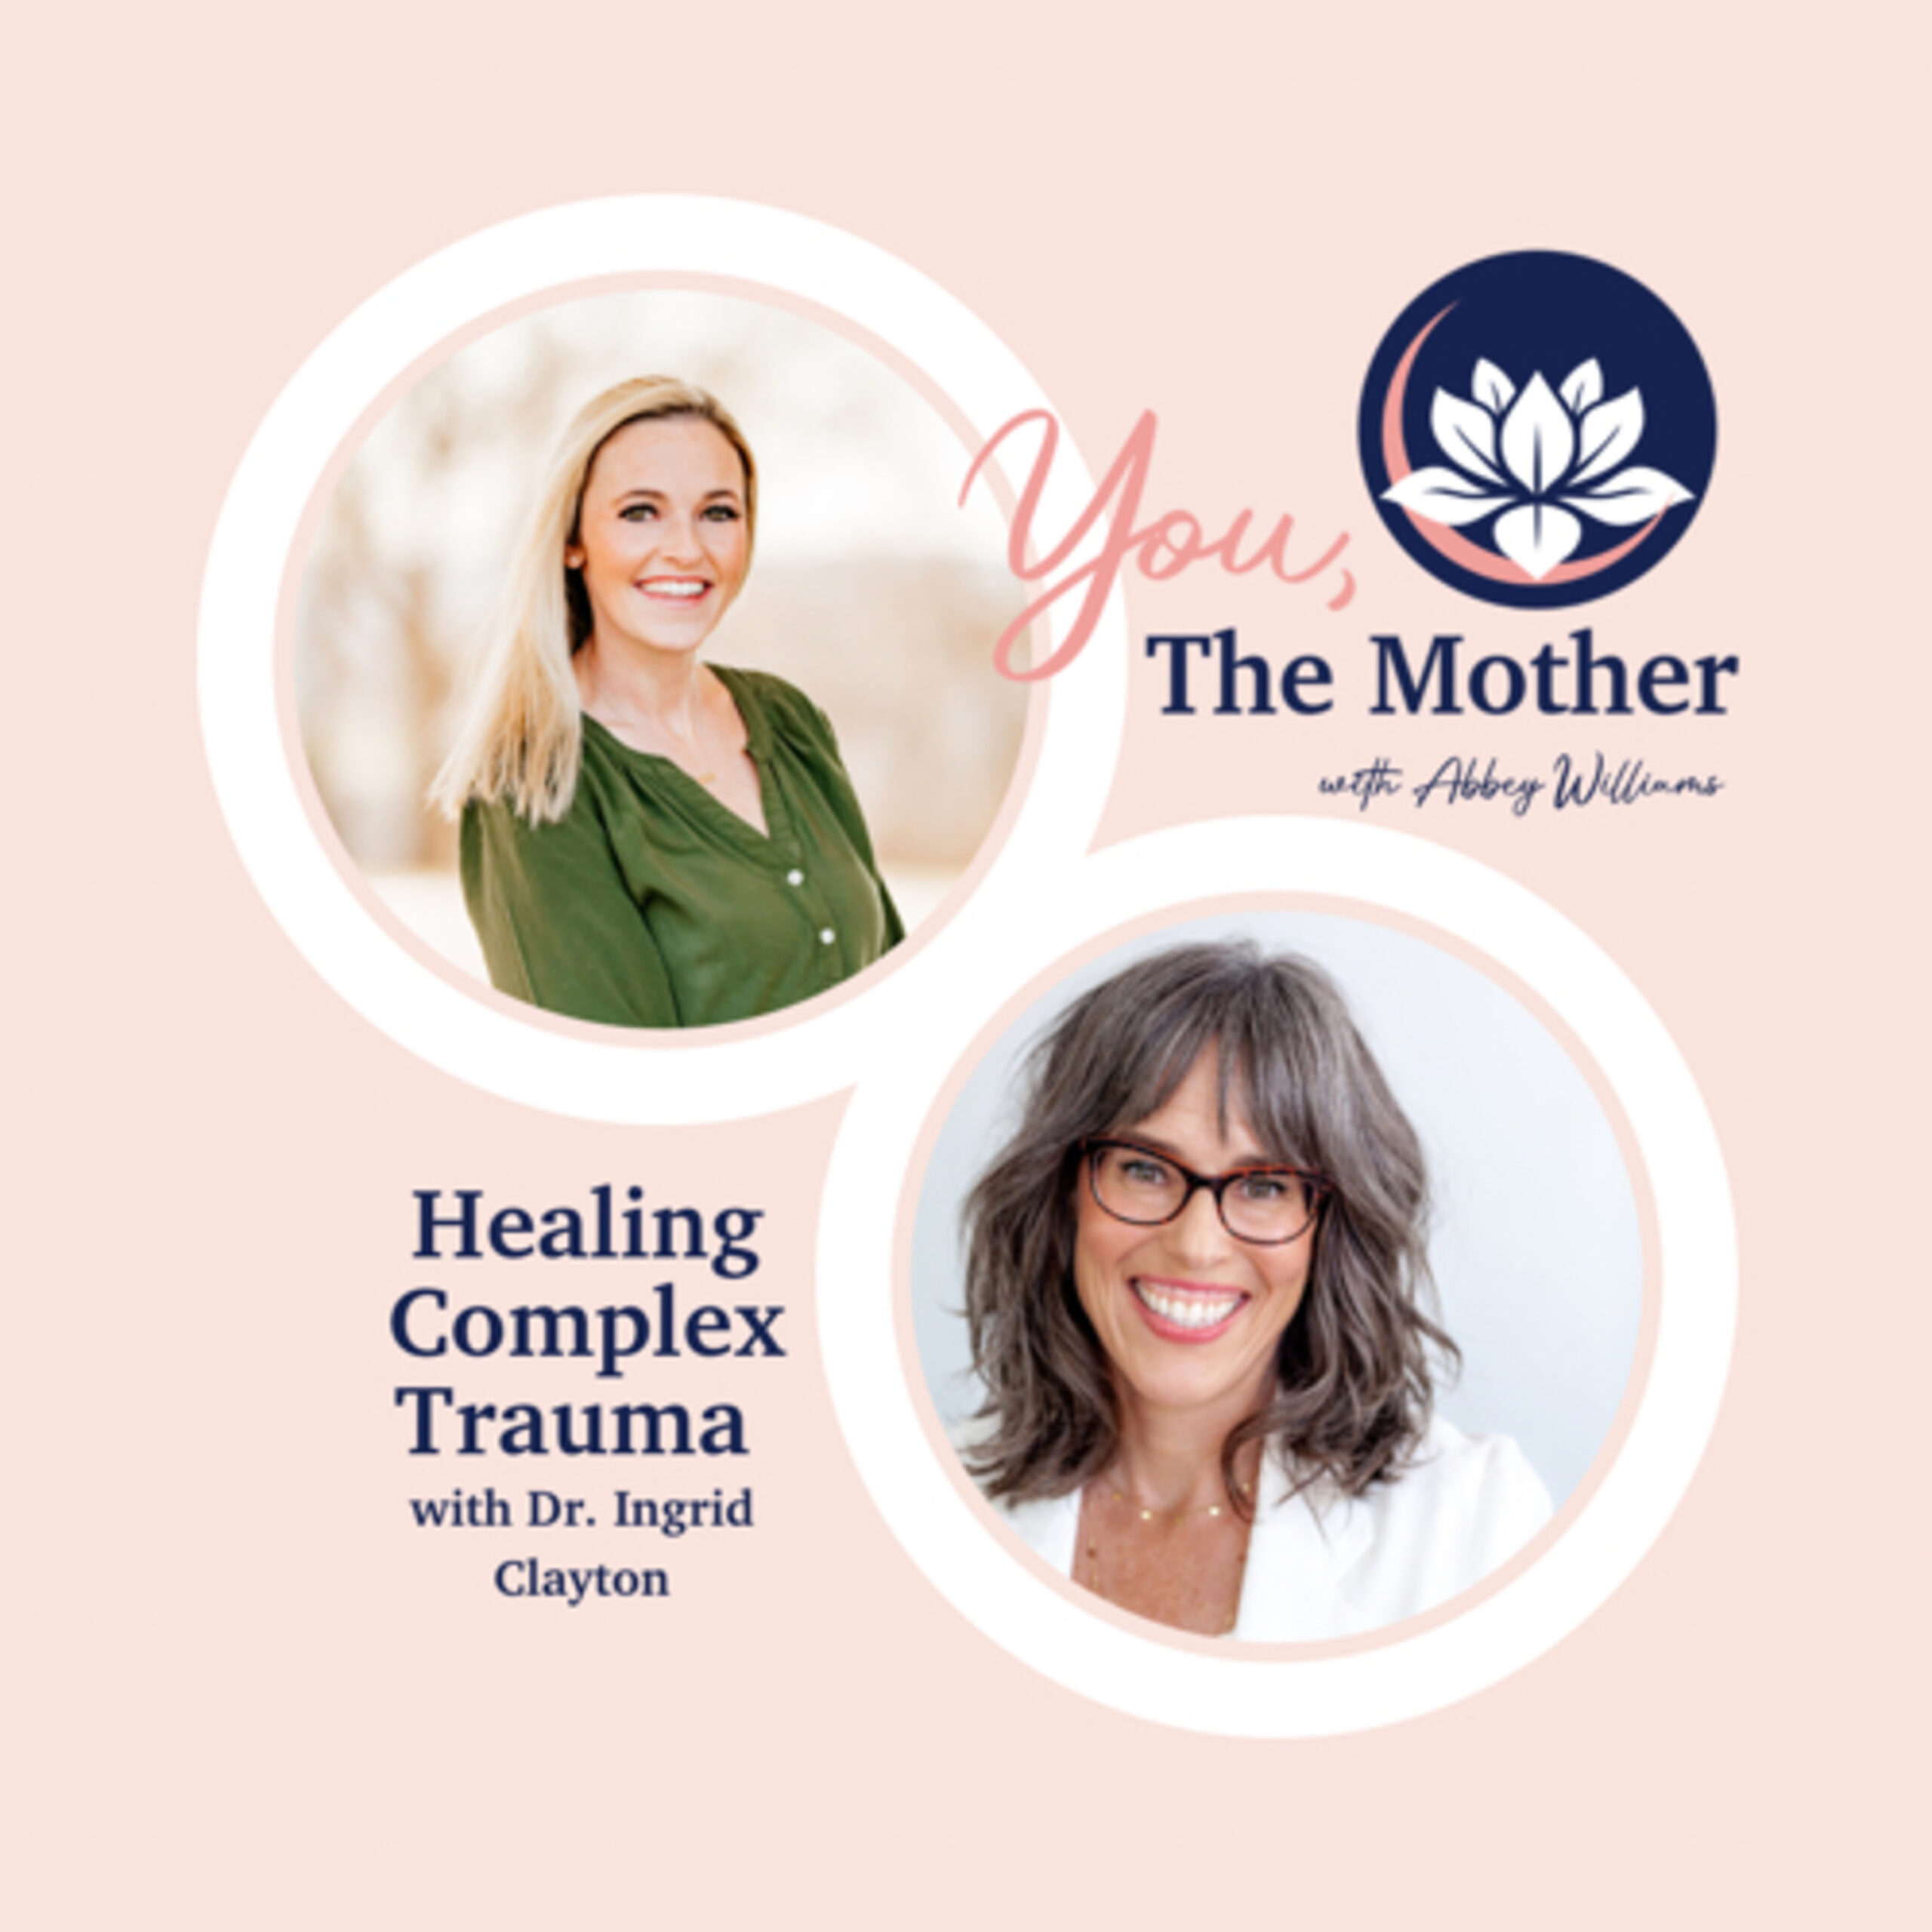 Healing Complex Trauma With Dr. Ingrid Clayton